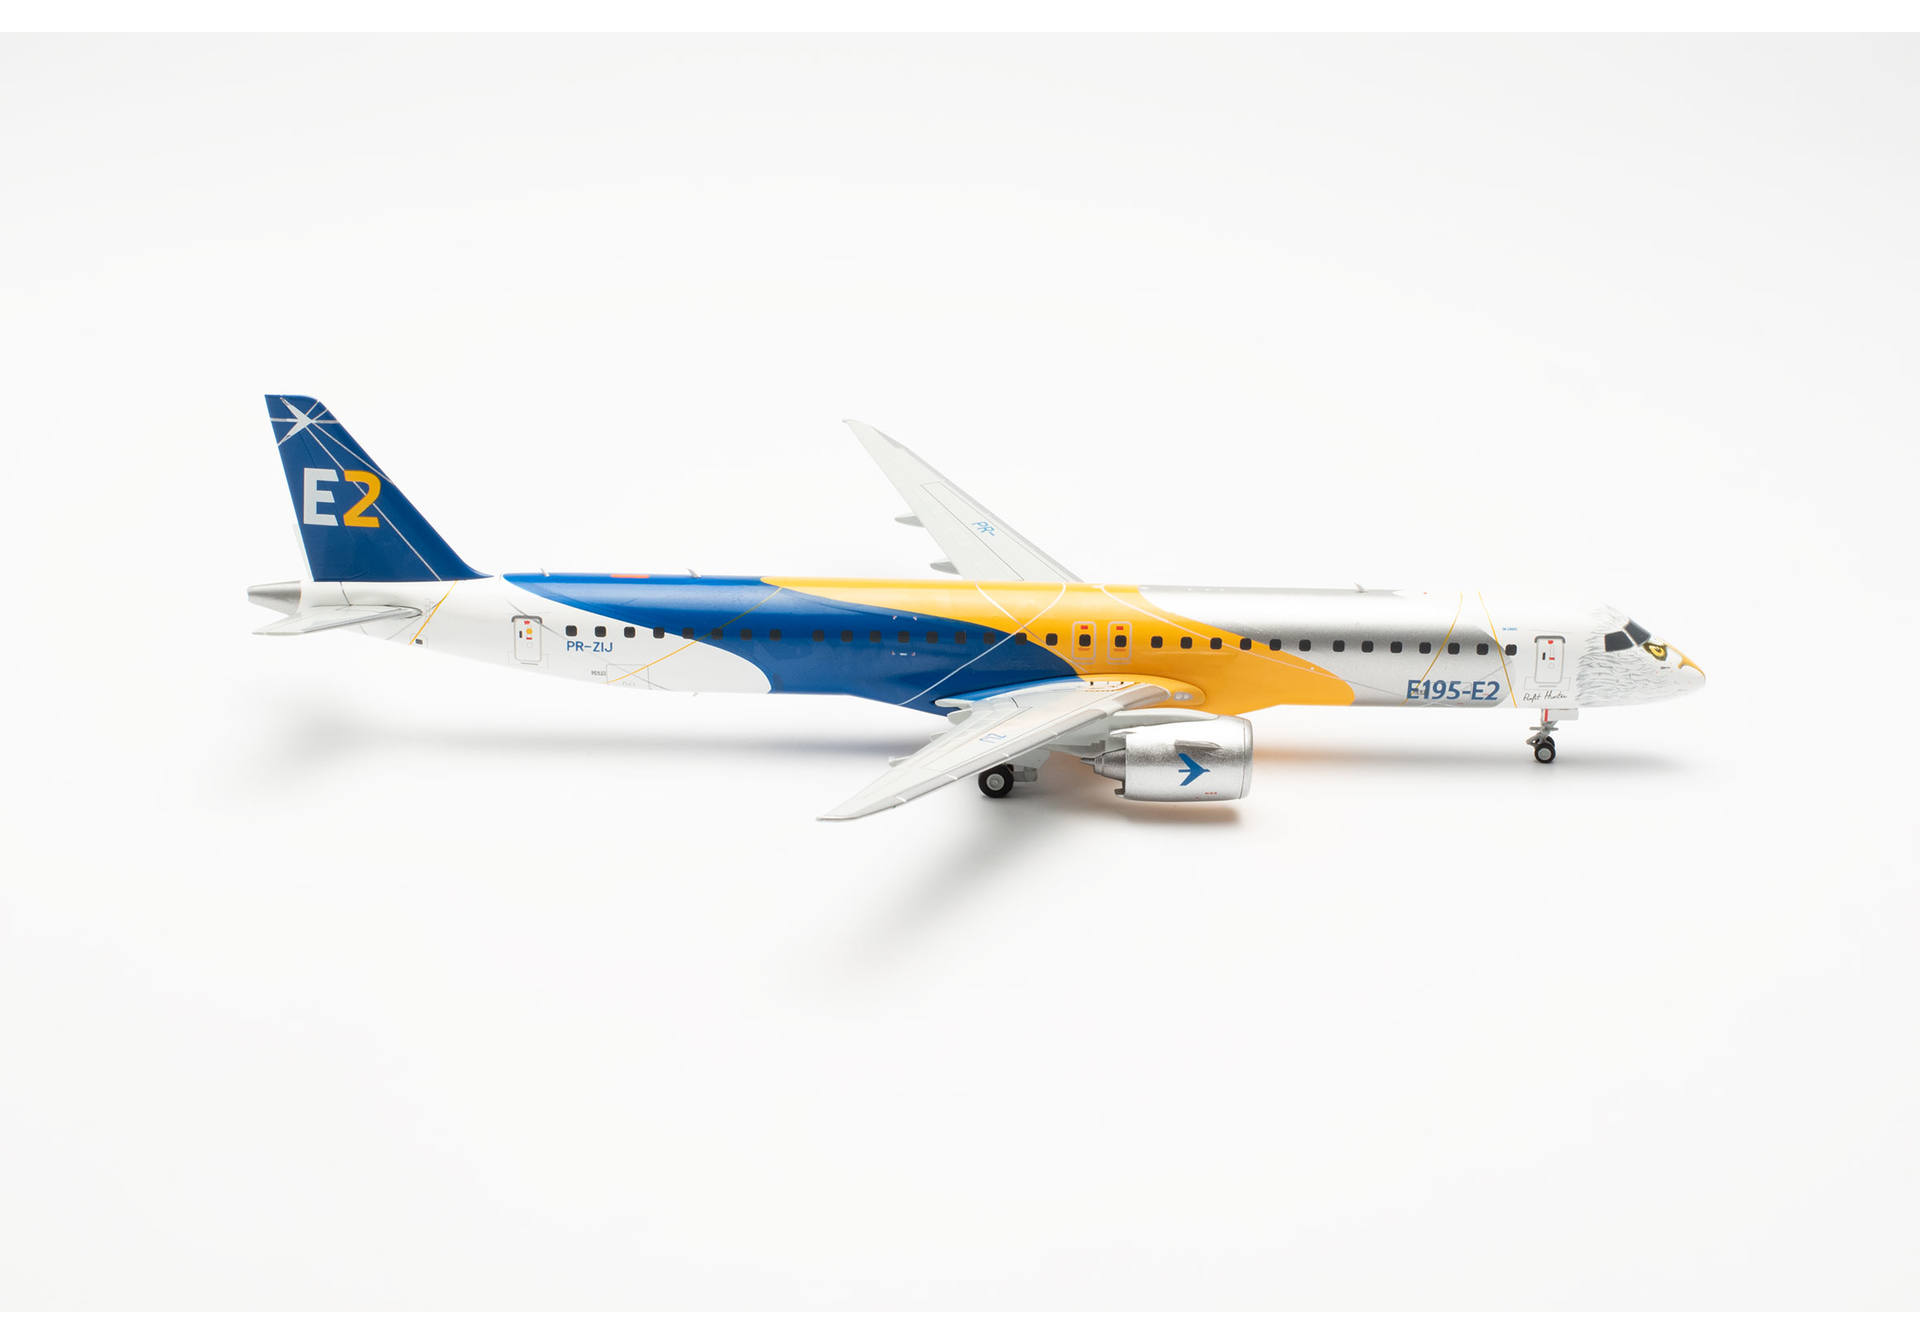 Embraer E195-E2 “Profit Hunter - Golden Eagle” - PR-ZIJ